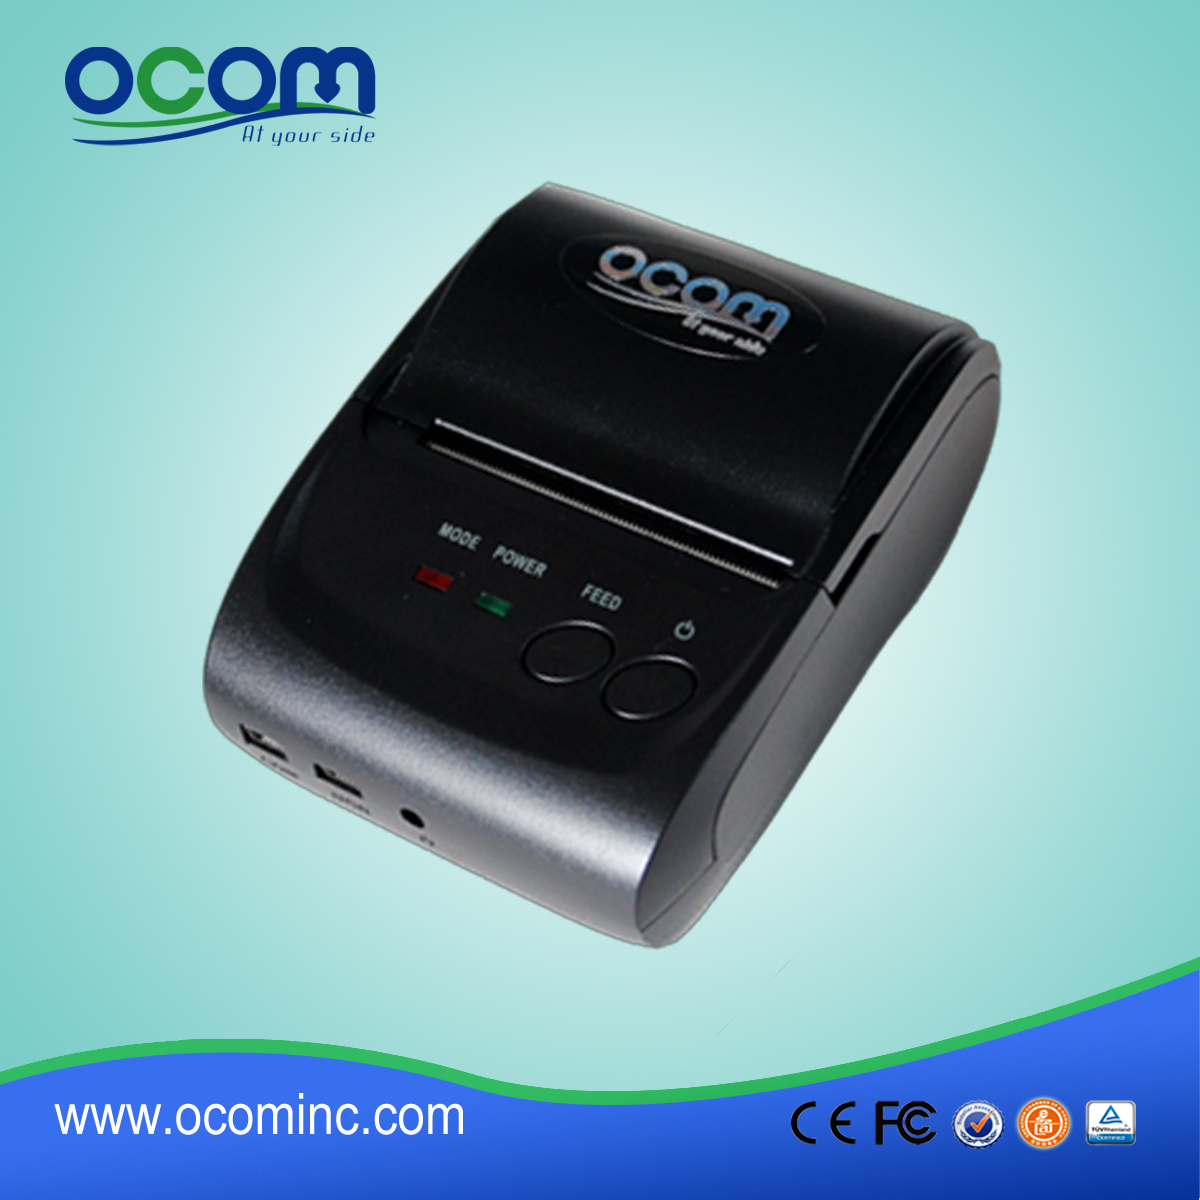 OCPP-M05: mini-ordinateur de poche imprimante bluetooth, POS imprimante thermique